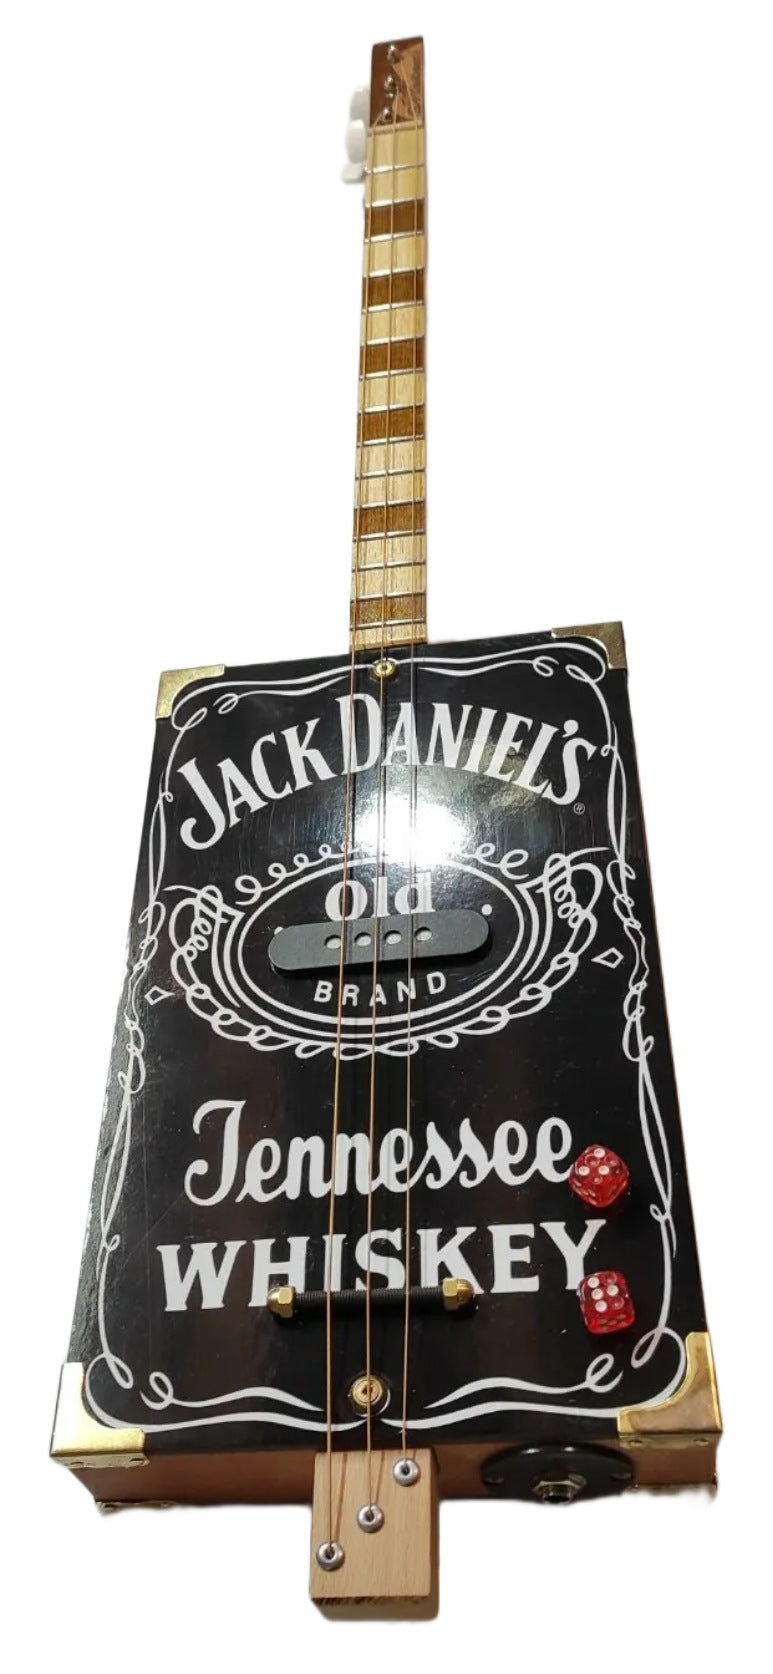 Jack Daniel's 3tpv tribute Cigar Box Guitar